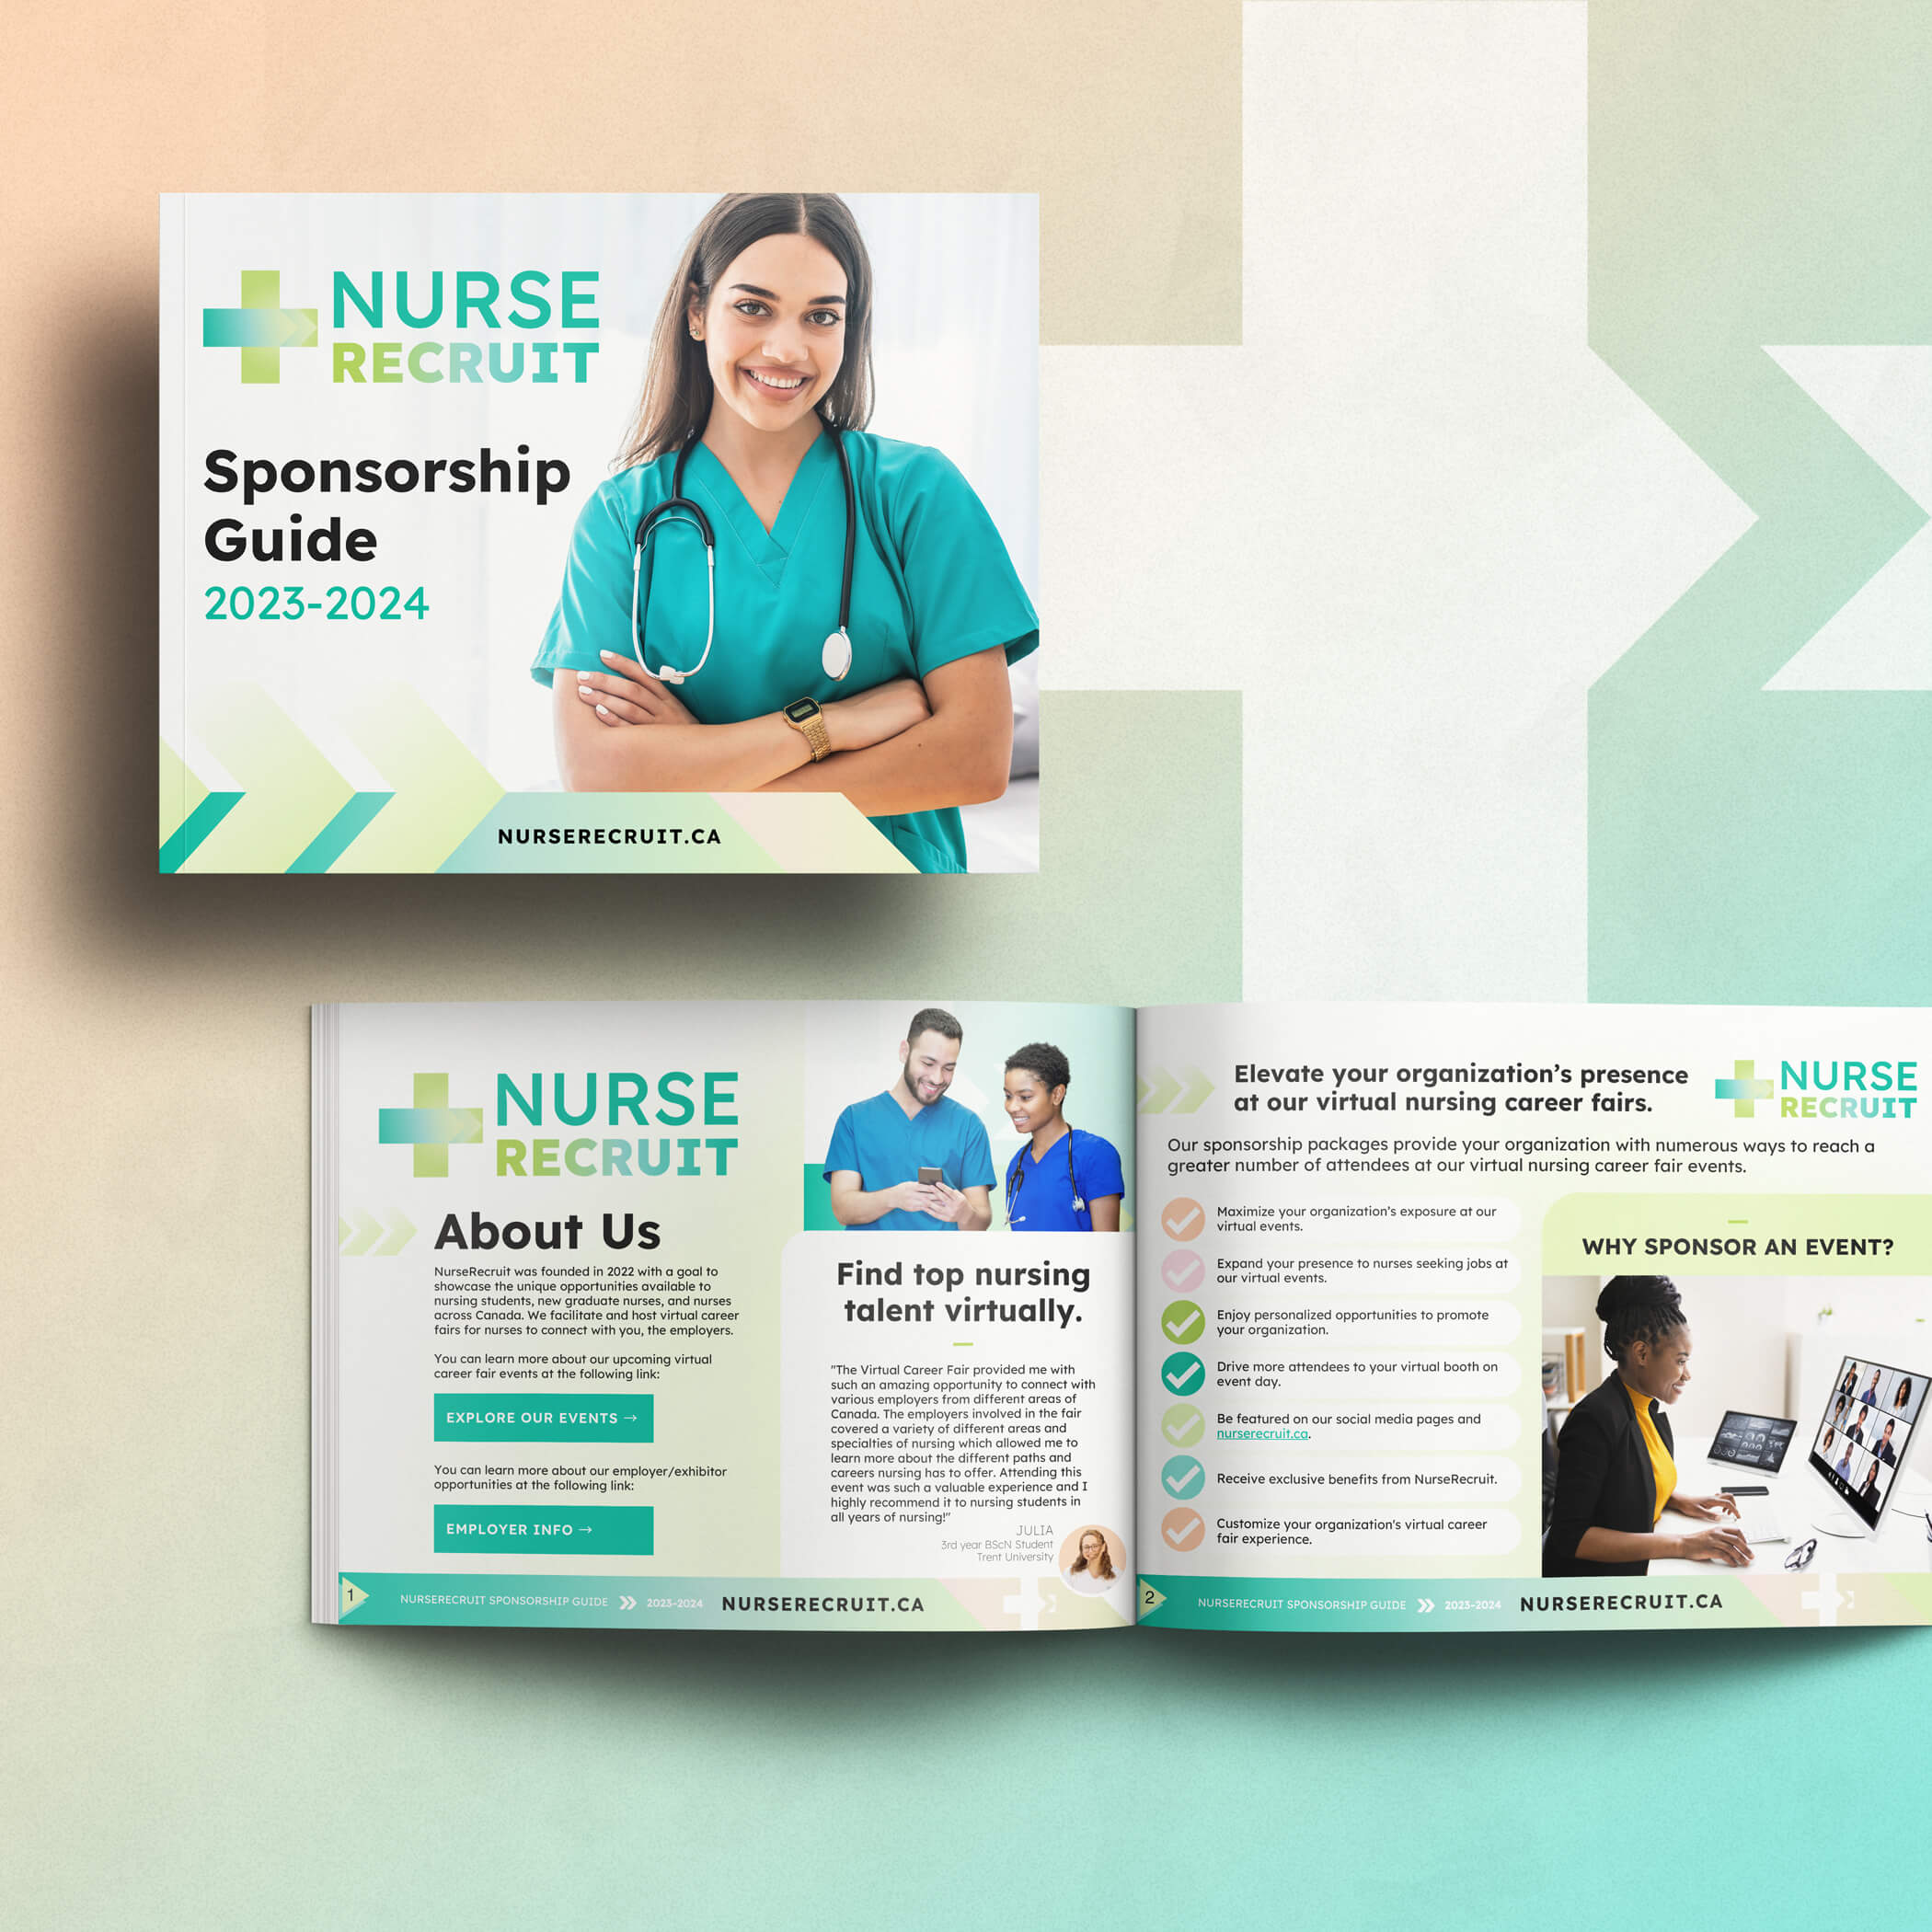 Website Design, Visual Identity and Digital Marketing for NurseRecruit by Tulip Tree Creative